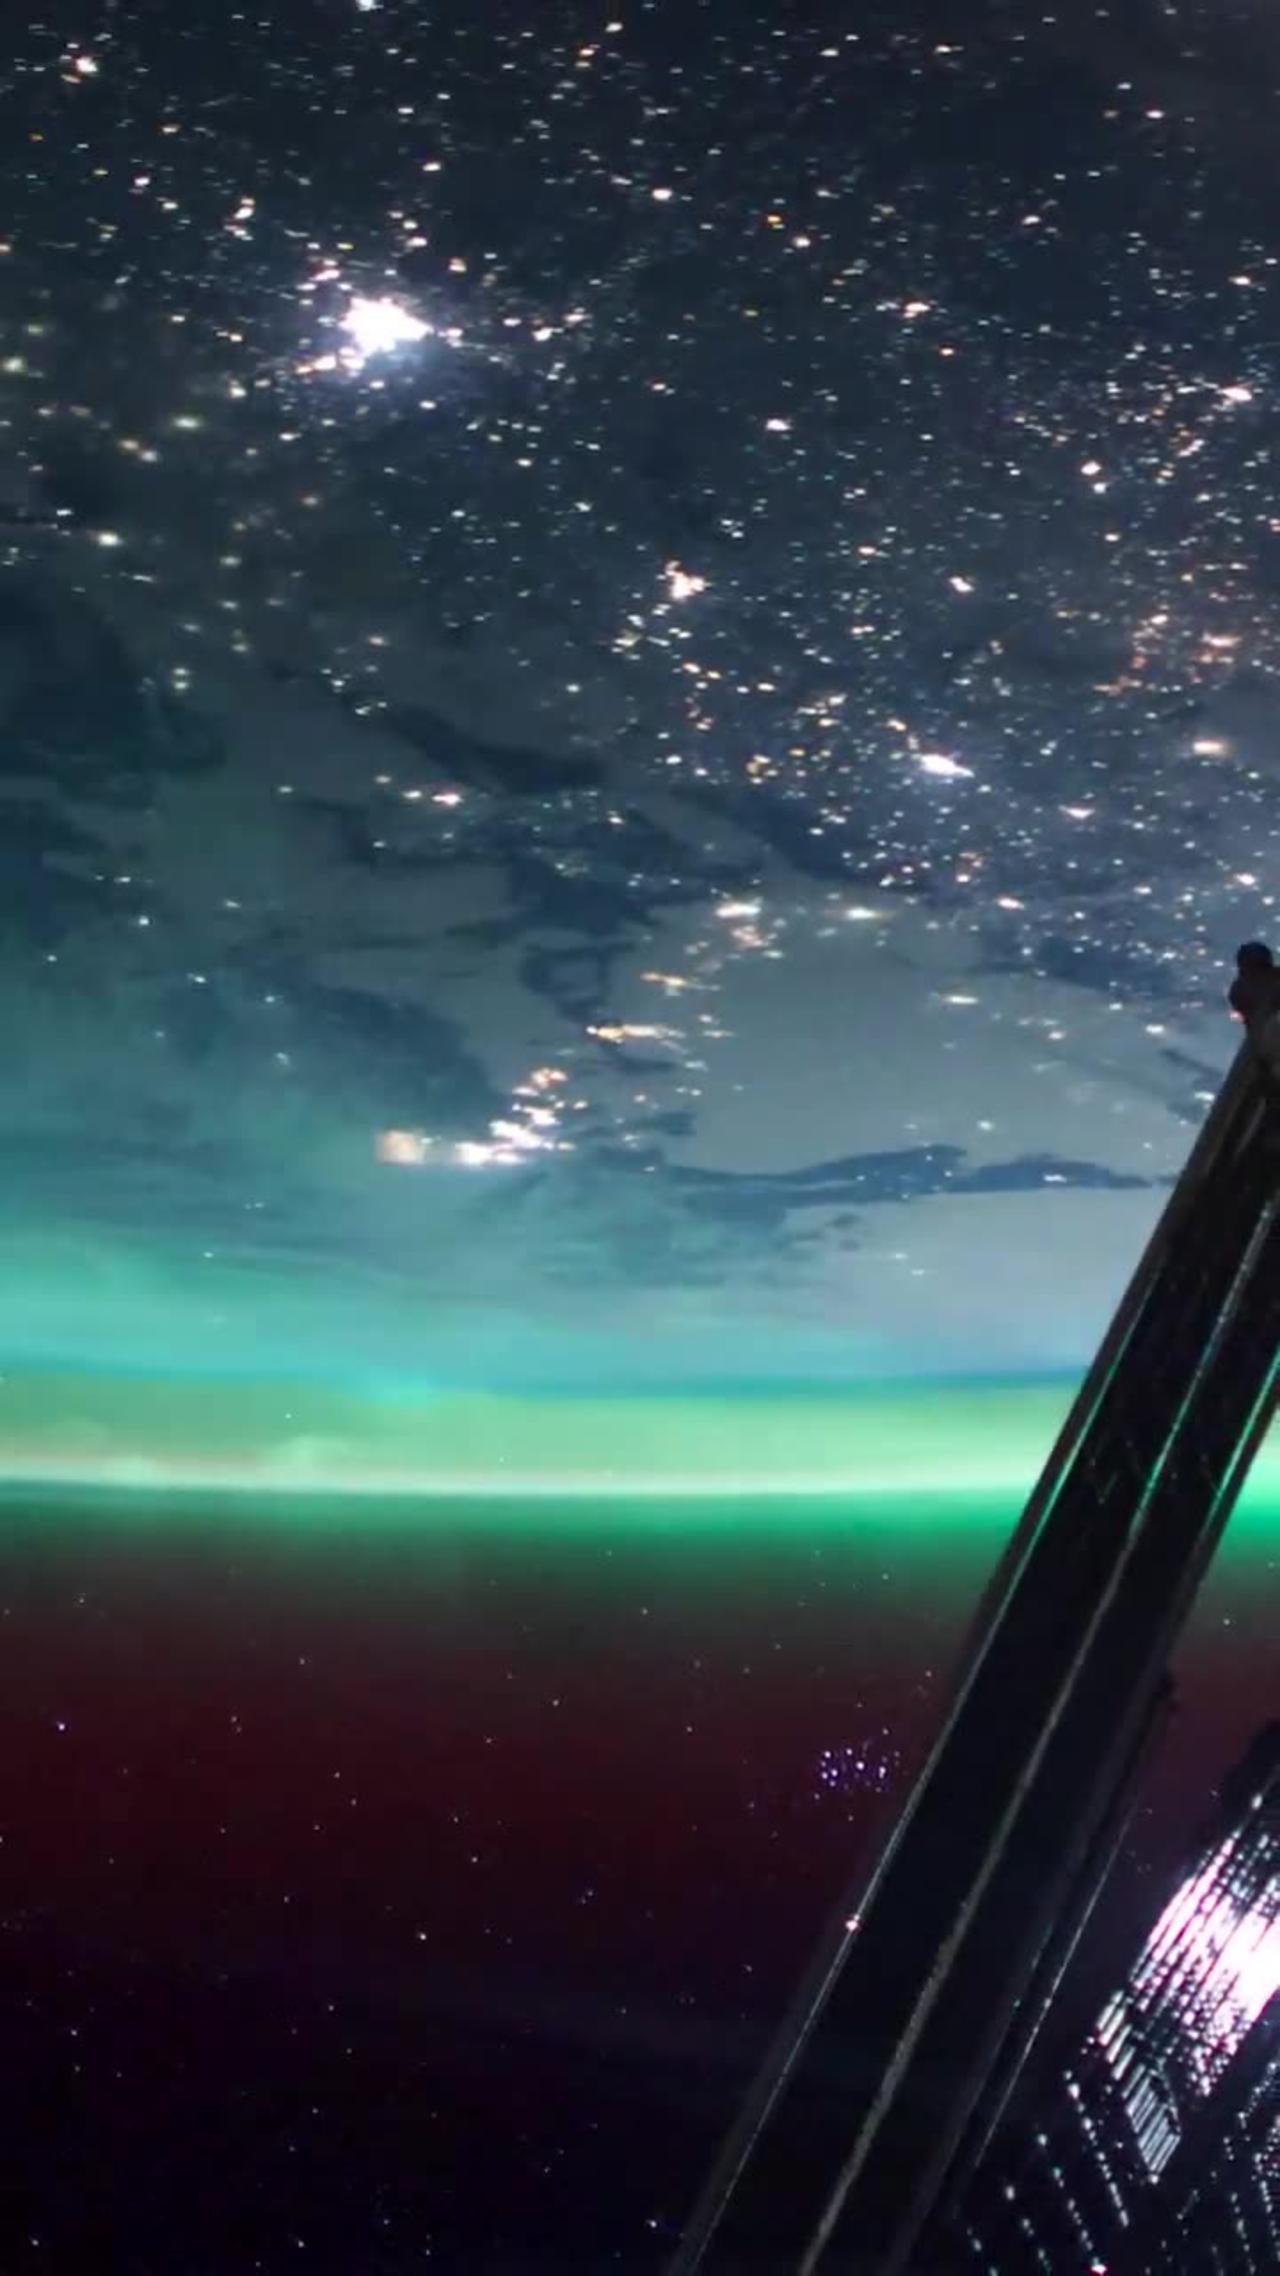 Northern Lights Seen From the International Space Station #auroraborealis #NightSkyMagic#aurora#NASA